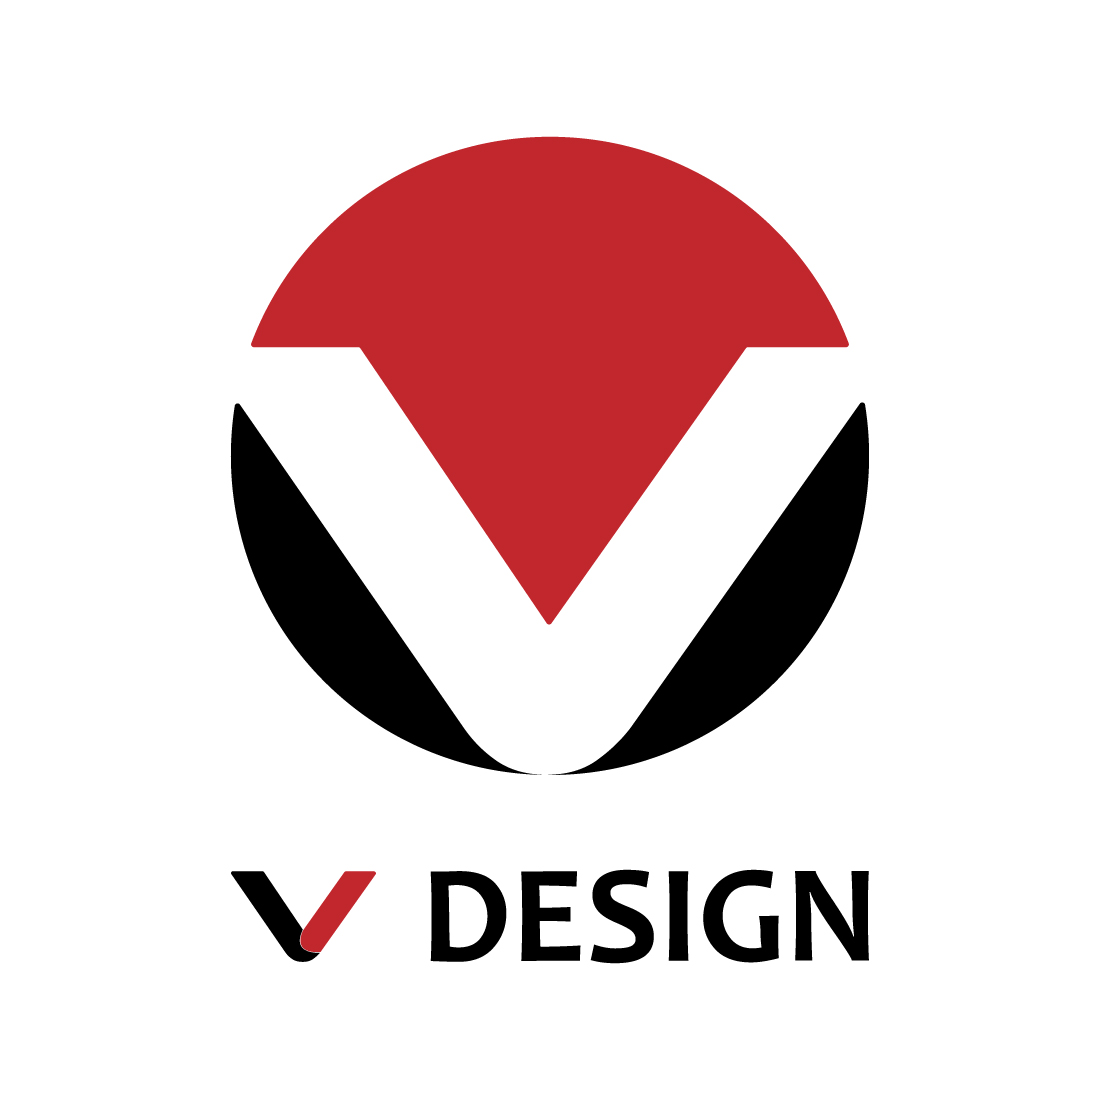 Initials V letter logo design red black ang white color best icon V logo monogram vector template illustration preview image.